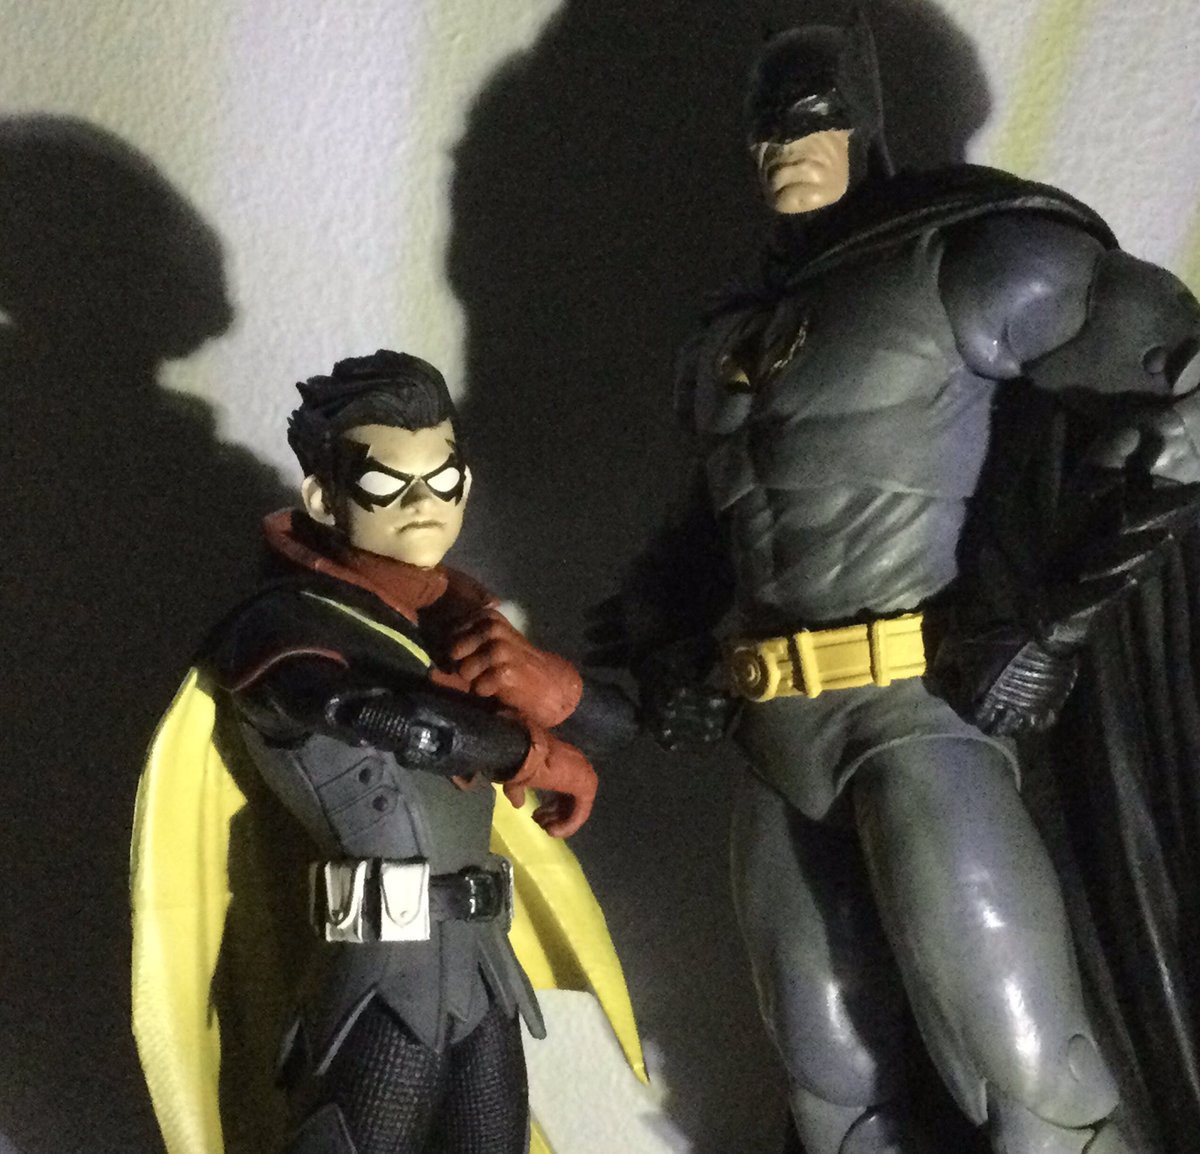 My Batman and Robin figures 
#Batman #Robin #DamianWayne #BatFamily #DCU #DcComics #DcUniverse #Dc #DawnOfDc #Comics